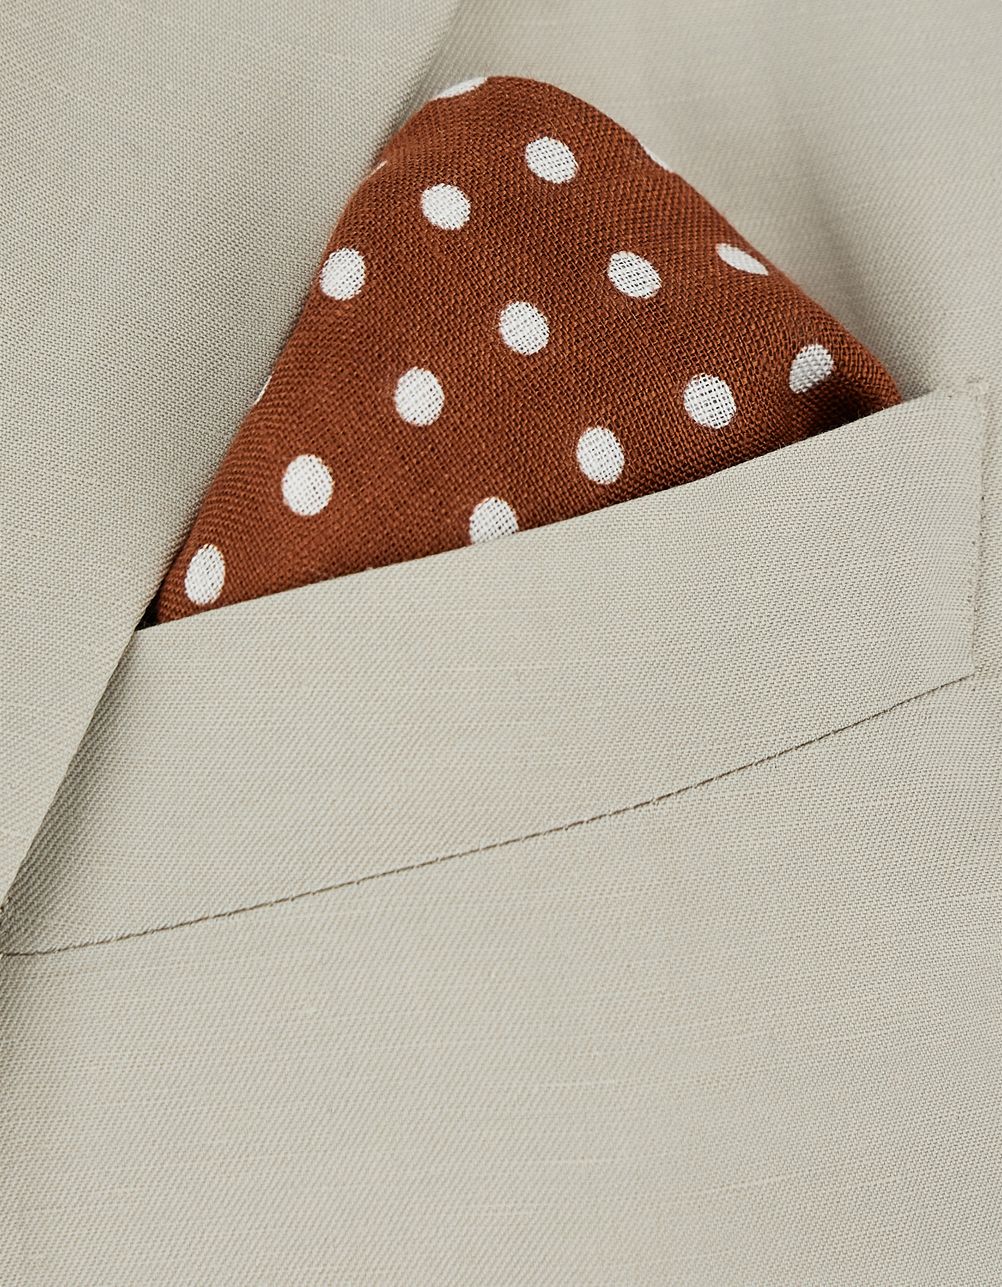 Pañuelo de bolsillo de lino estampado de lunares naranja